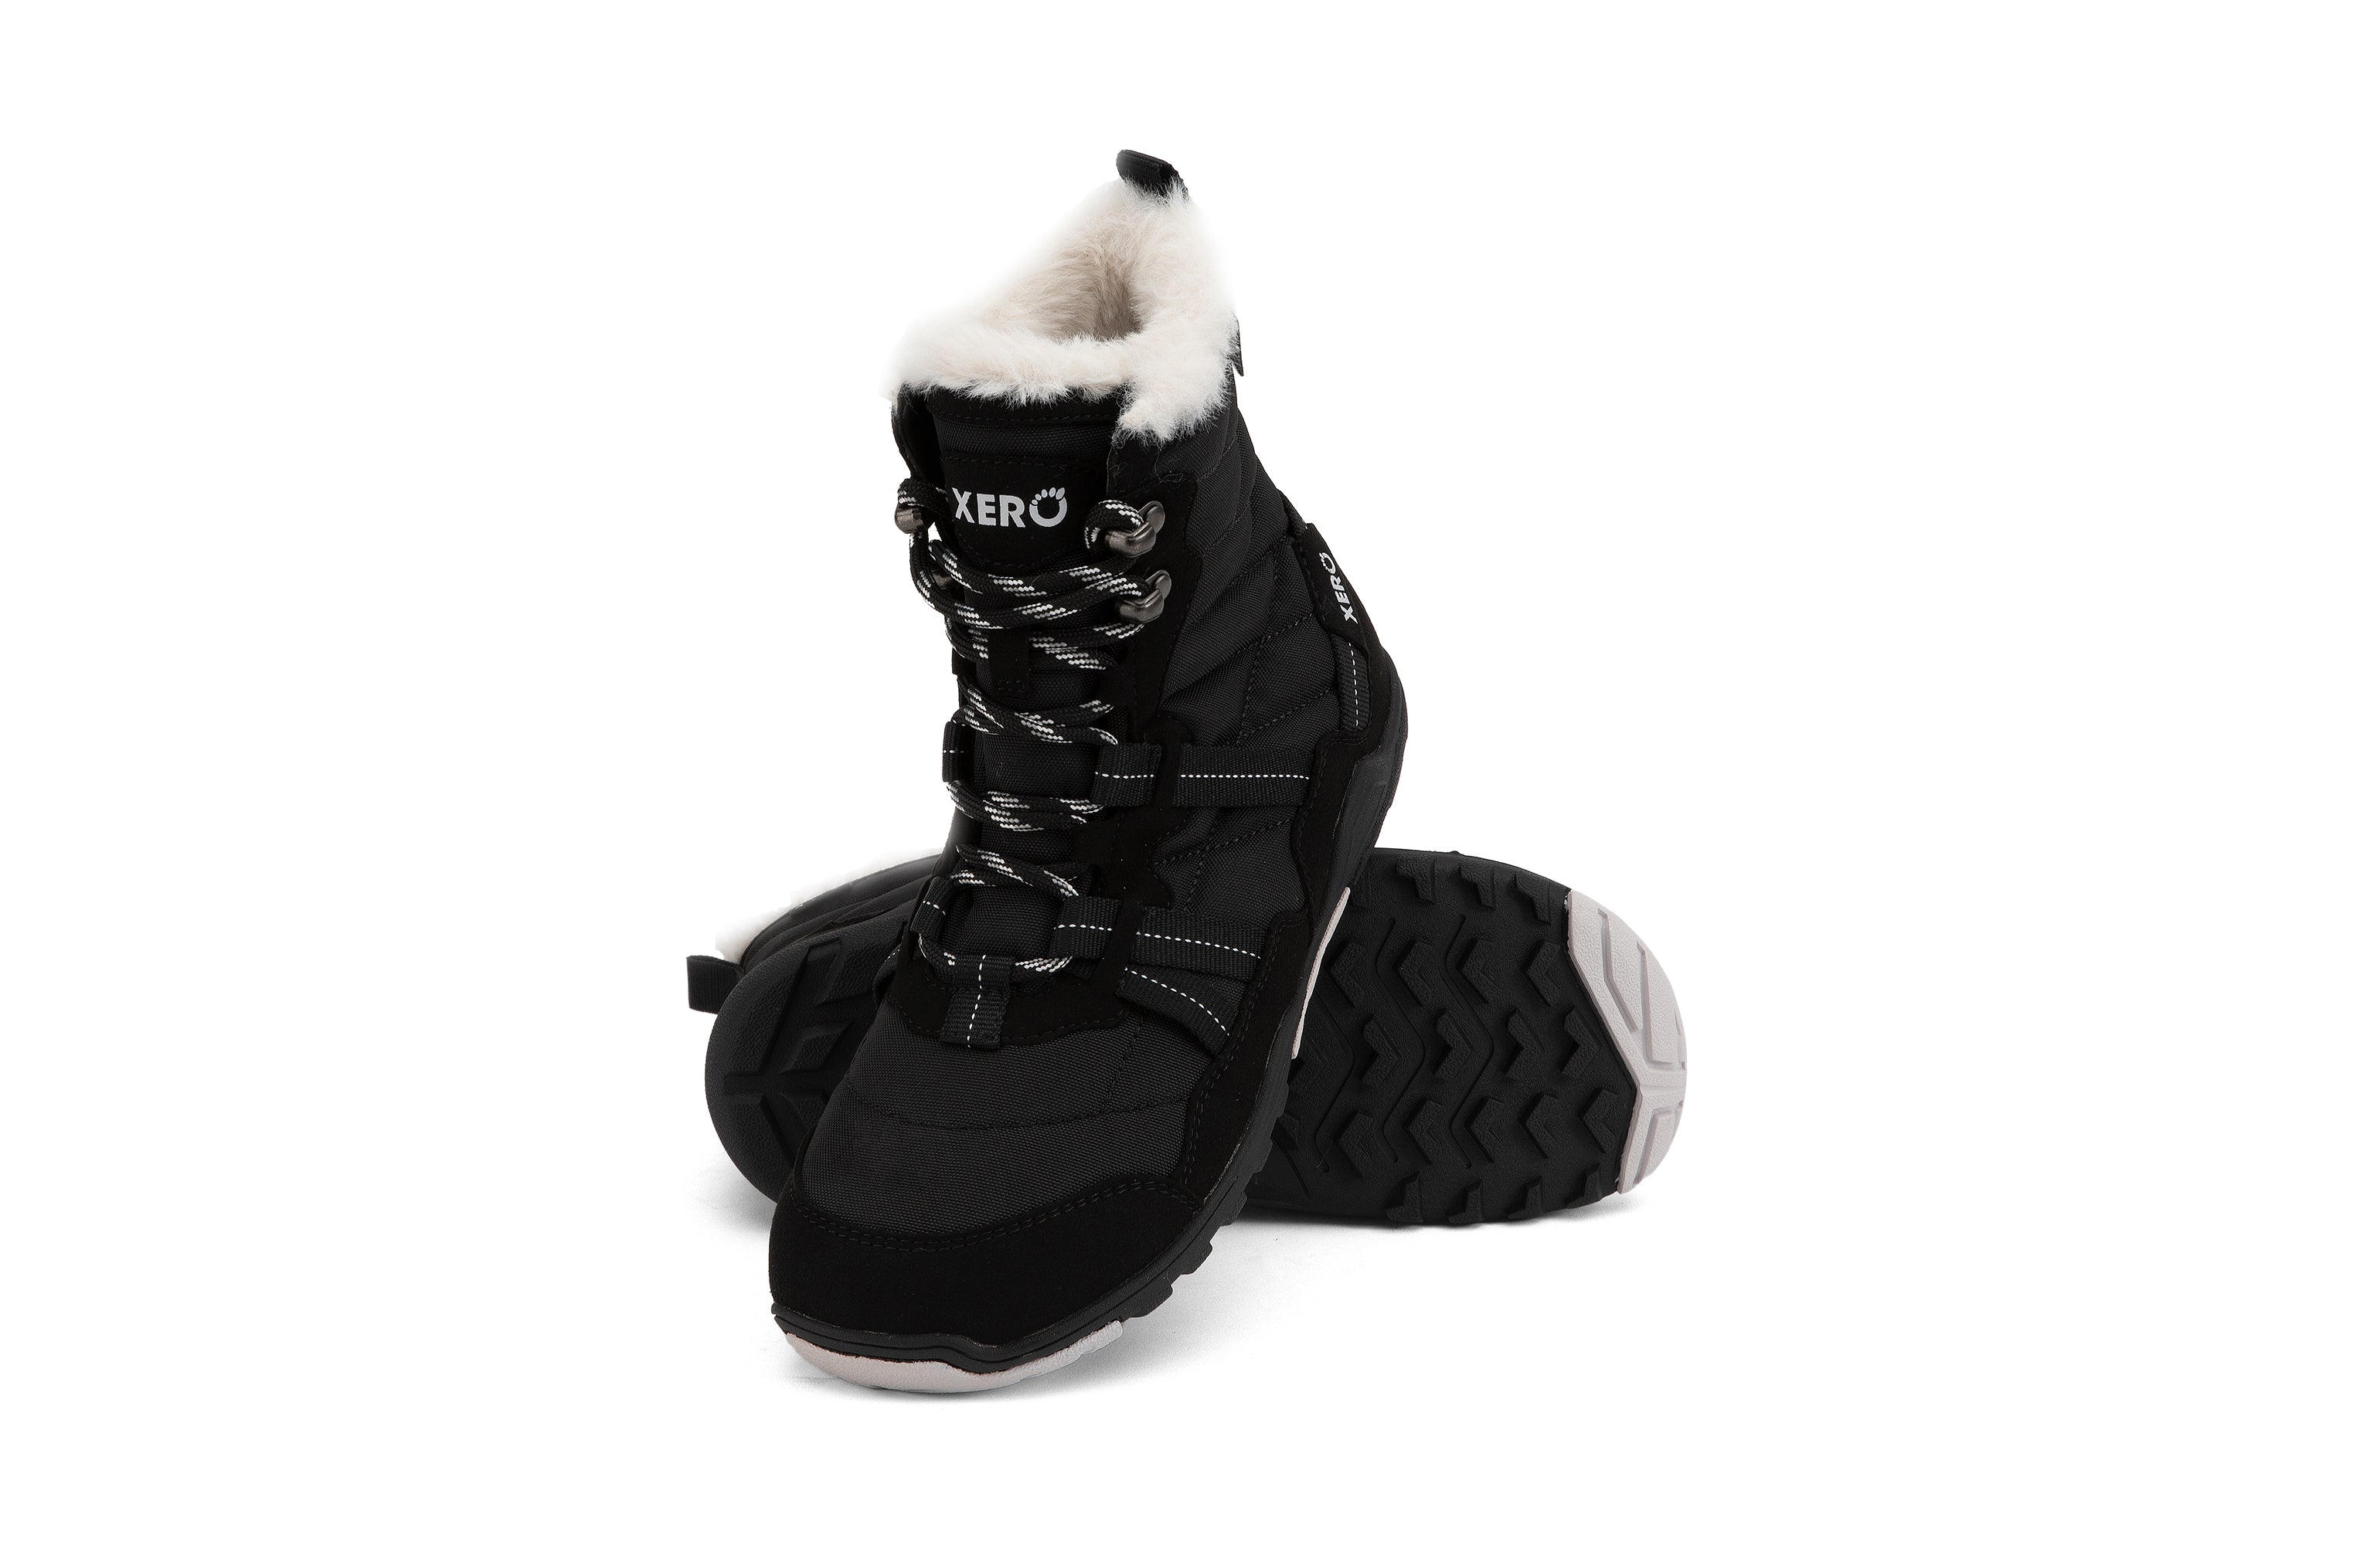 Xero Shoes Alpine Womens barfods vinterstøvler til kvinder i farven black, par